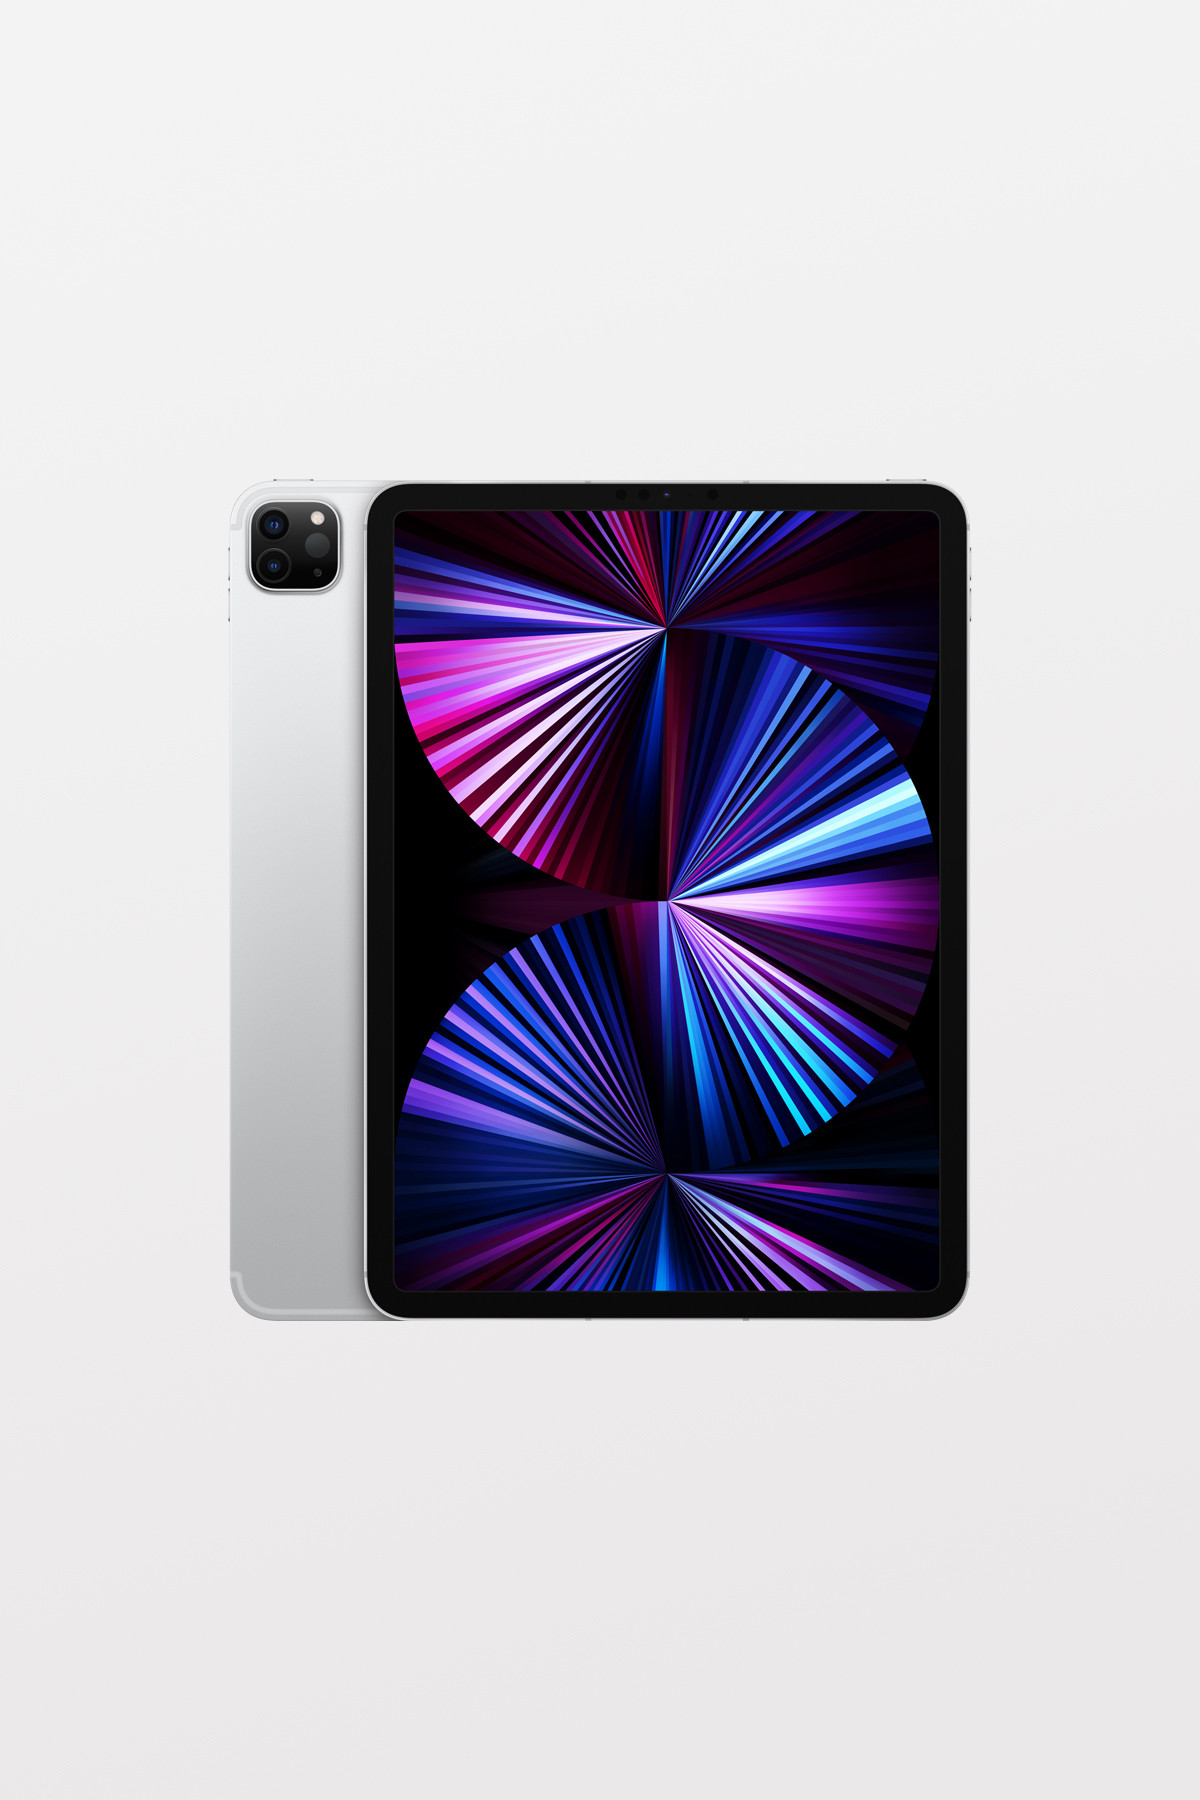 iPad Pro 11IN (3GEN) WI-FI + Cellular 256GB Silver